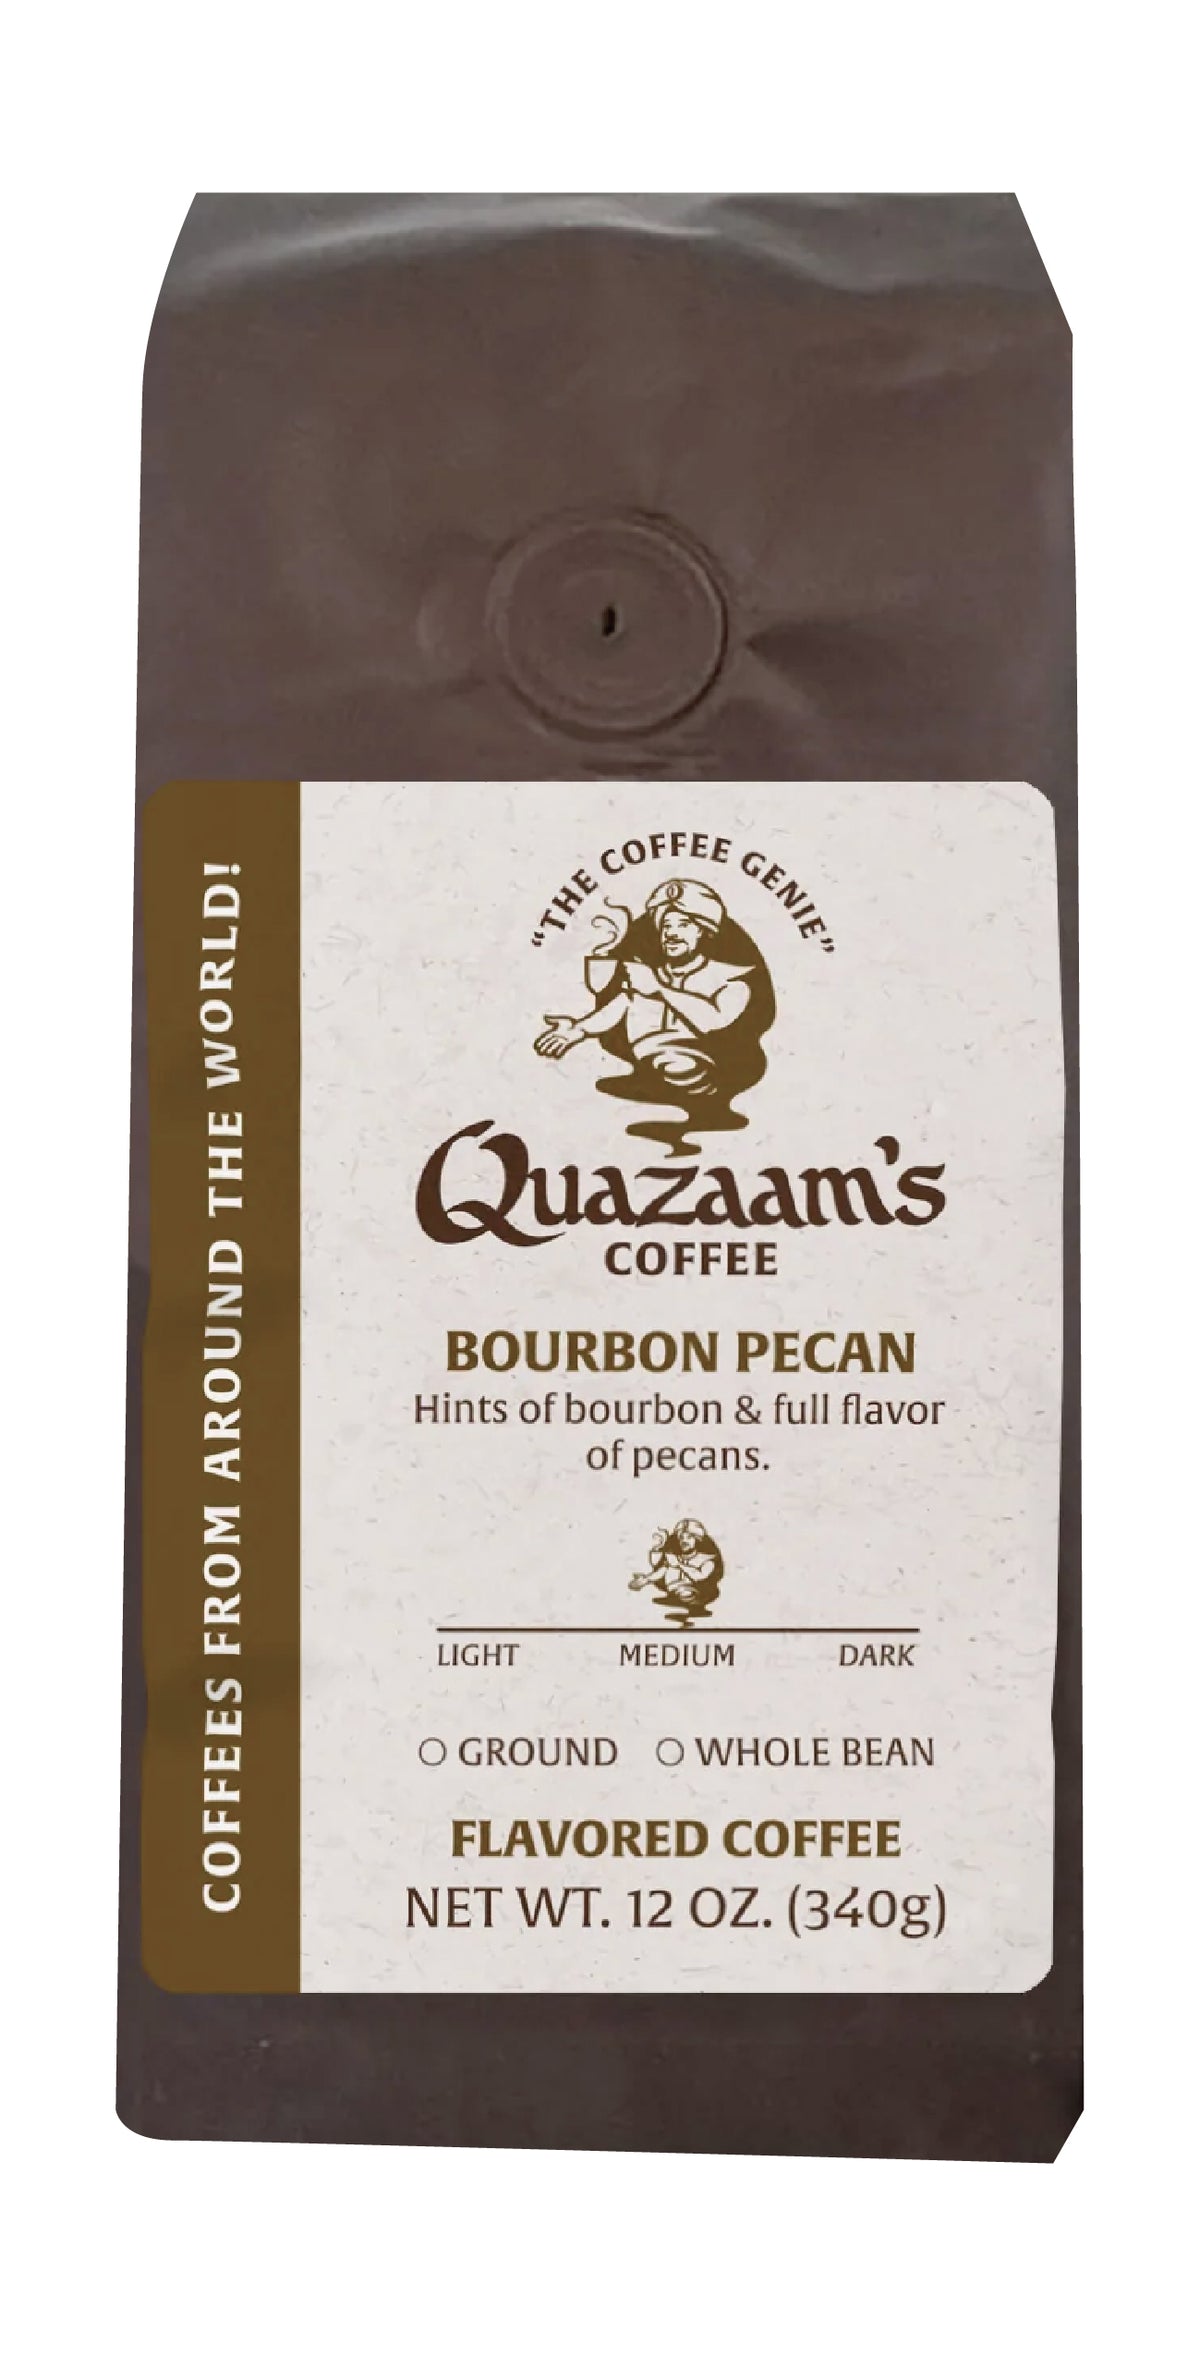 Image of Quazaam's Coffee's Pumpkin Spice coffe bag and coffee capsule